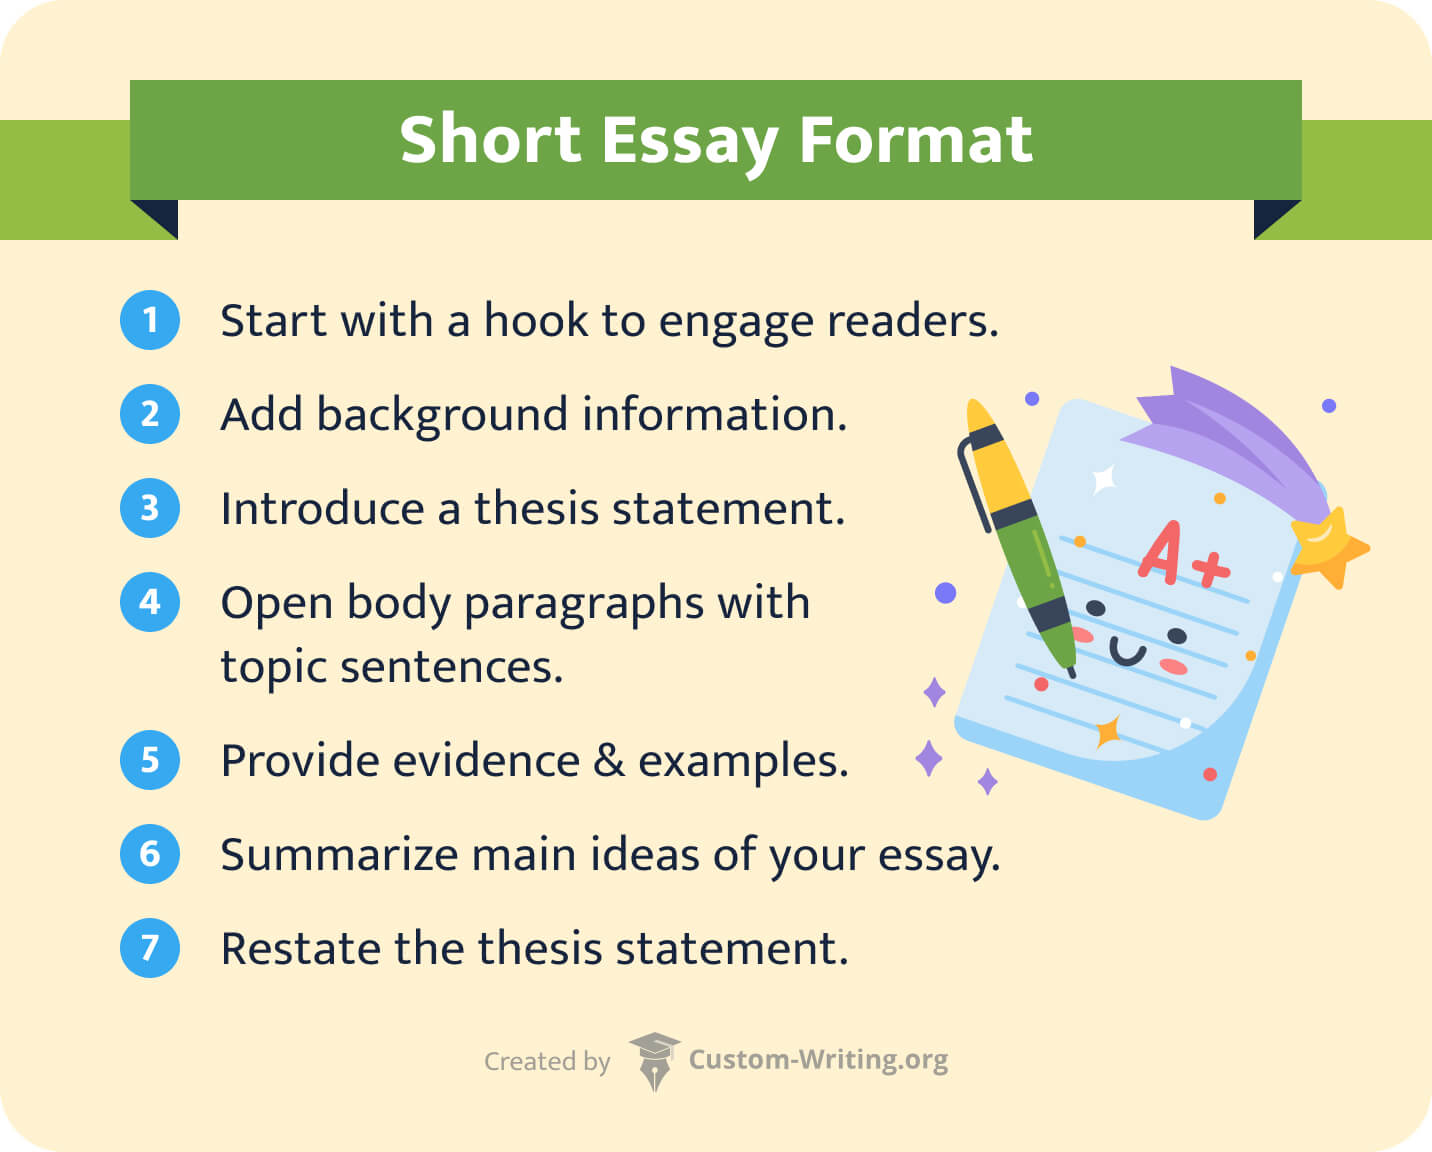 short essay format means